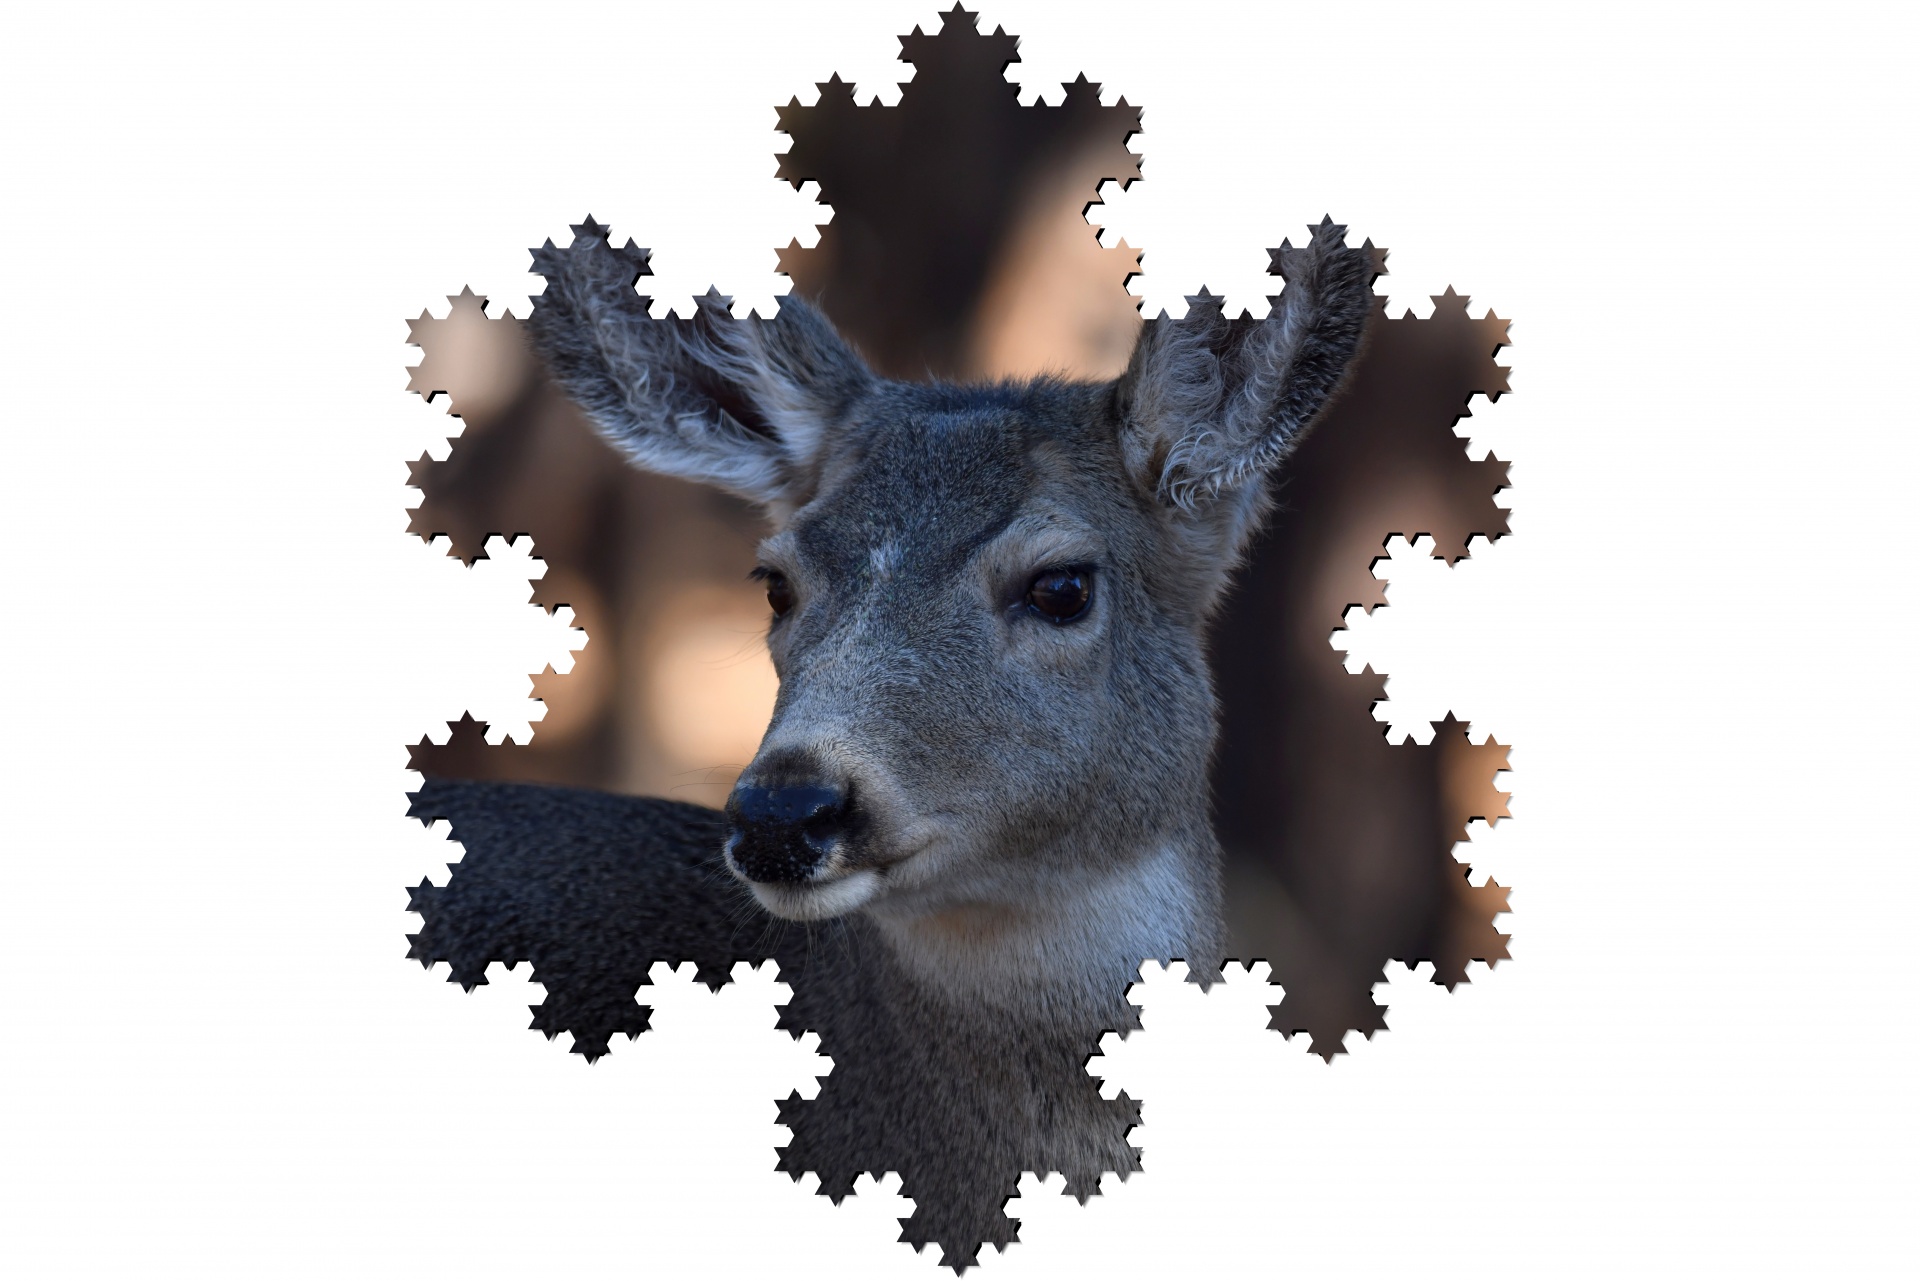 Deer Portrait Framed In A Snowflake